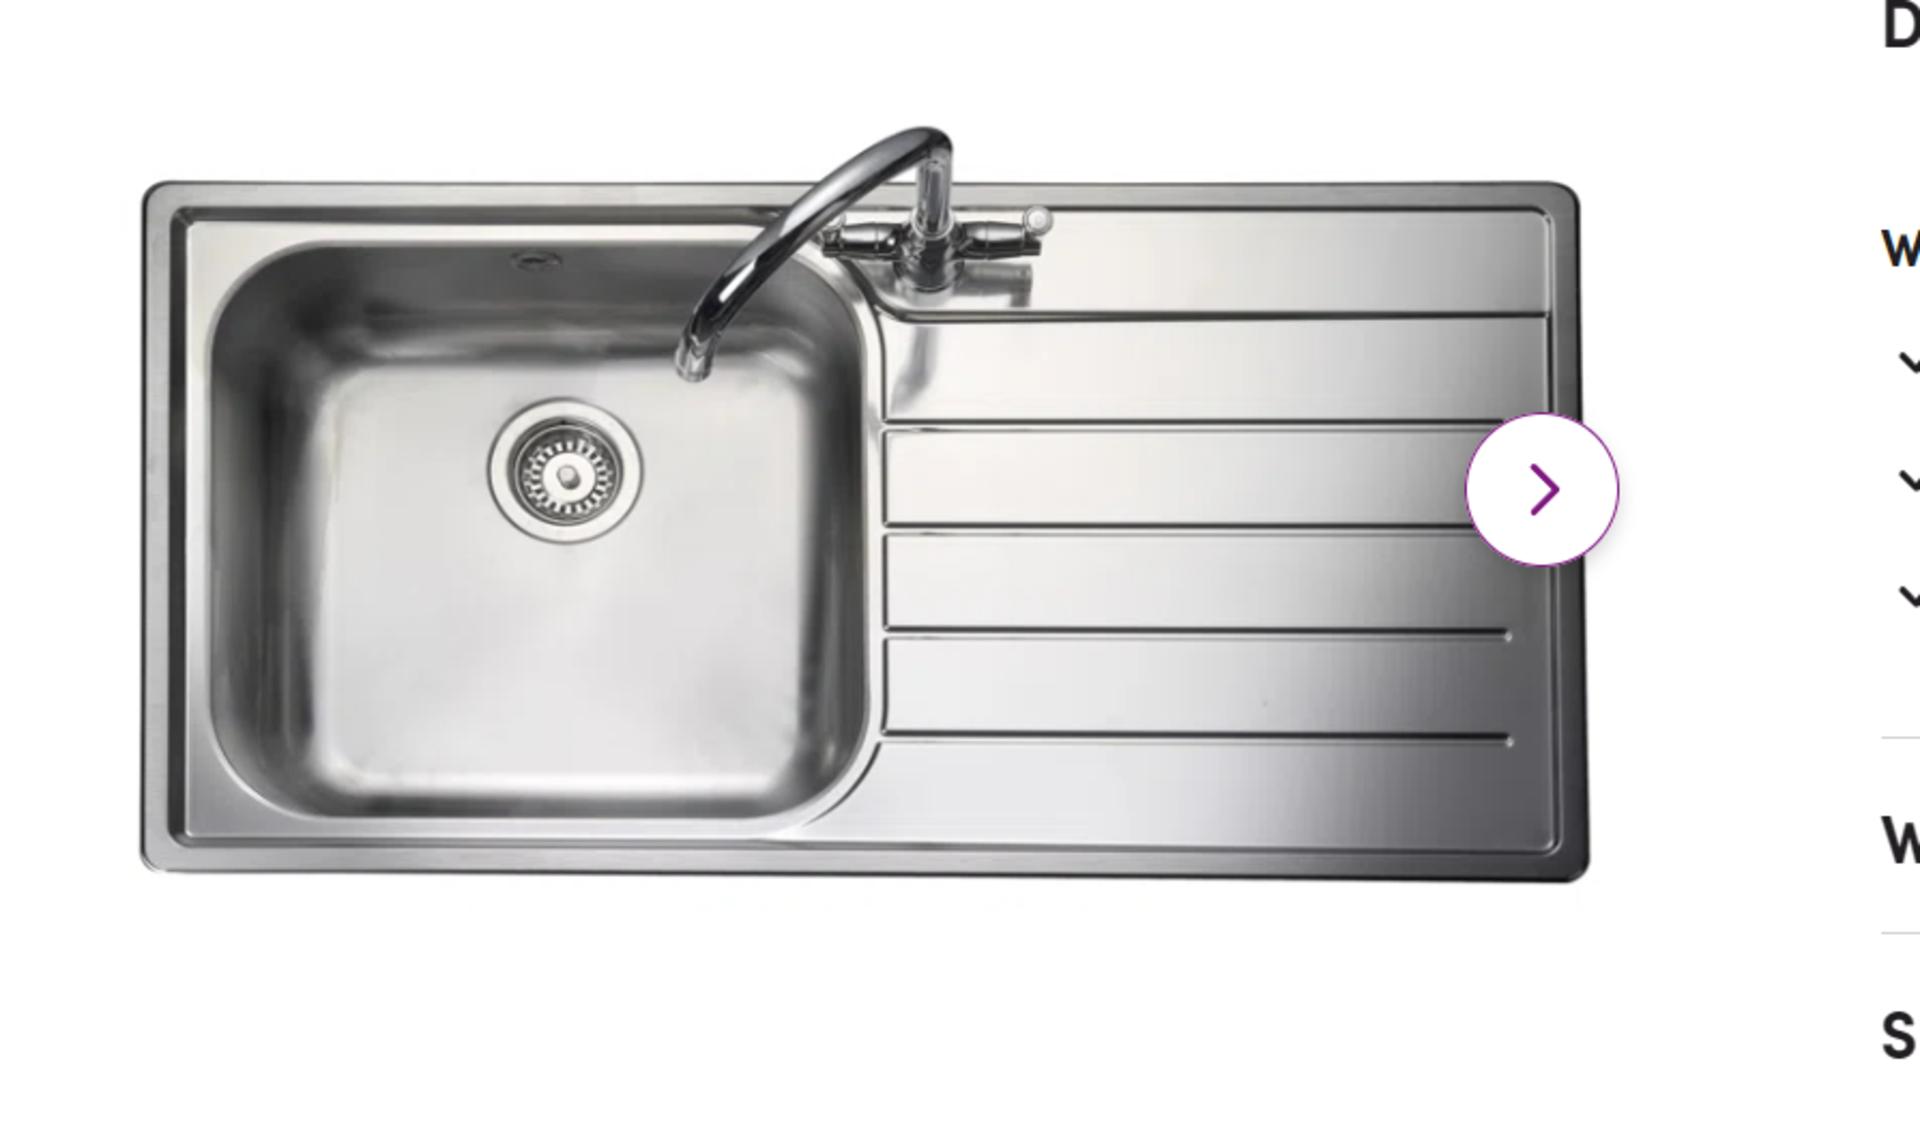 OL9851R/ Rangemaster Sink & Taps Oakland 508Mm W Single Bowl Stainless Steel Inset Kitchen Sink with